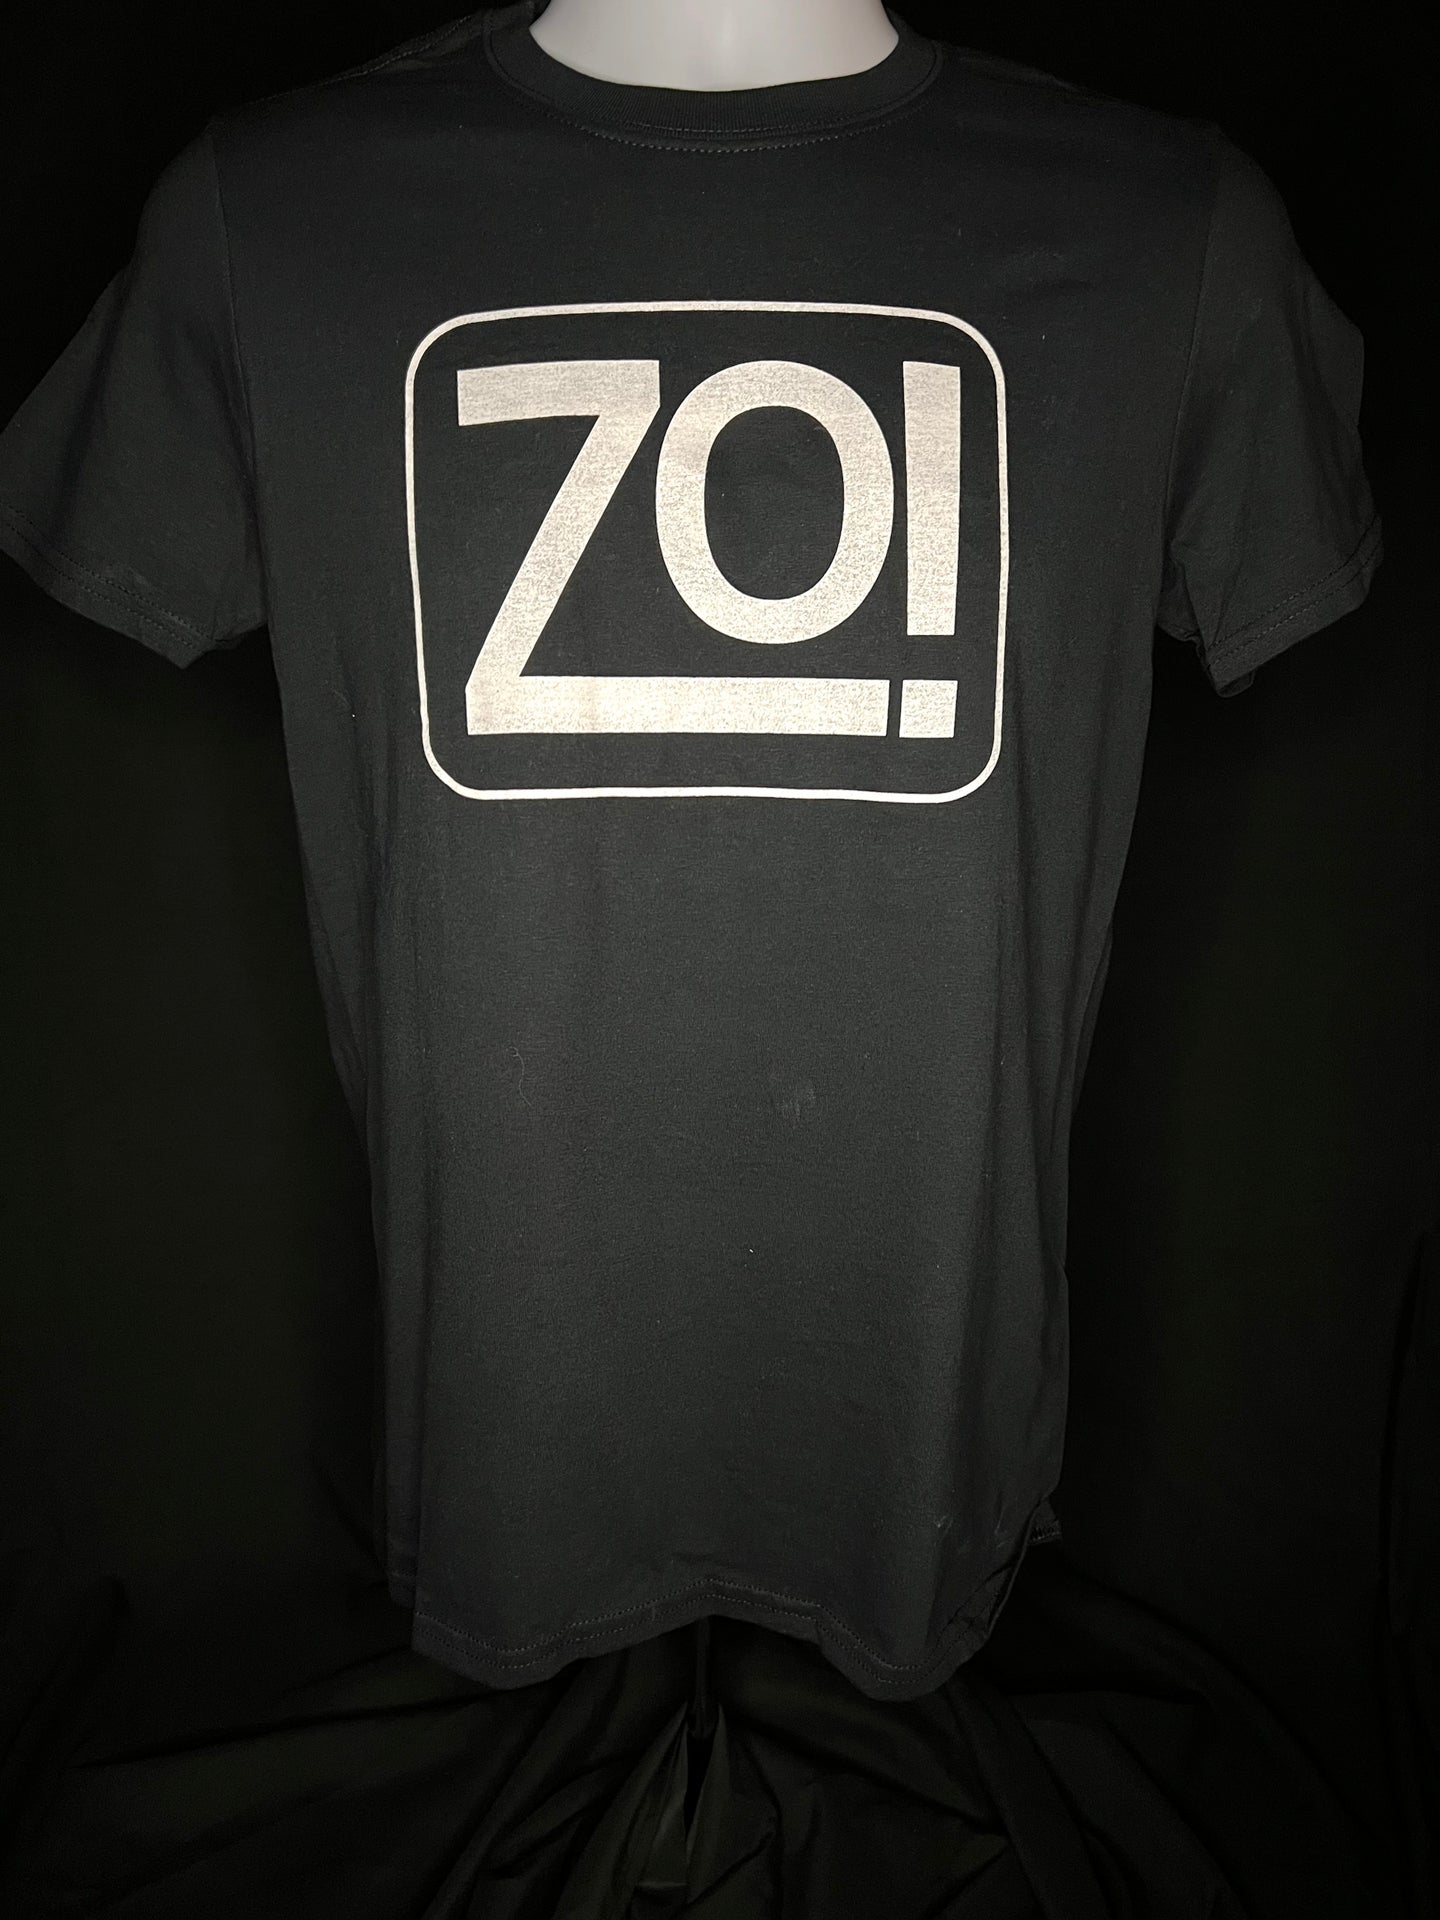 Zo! Black T-Shirt (Men's)